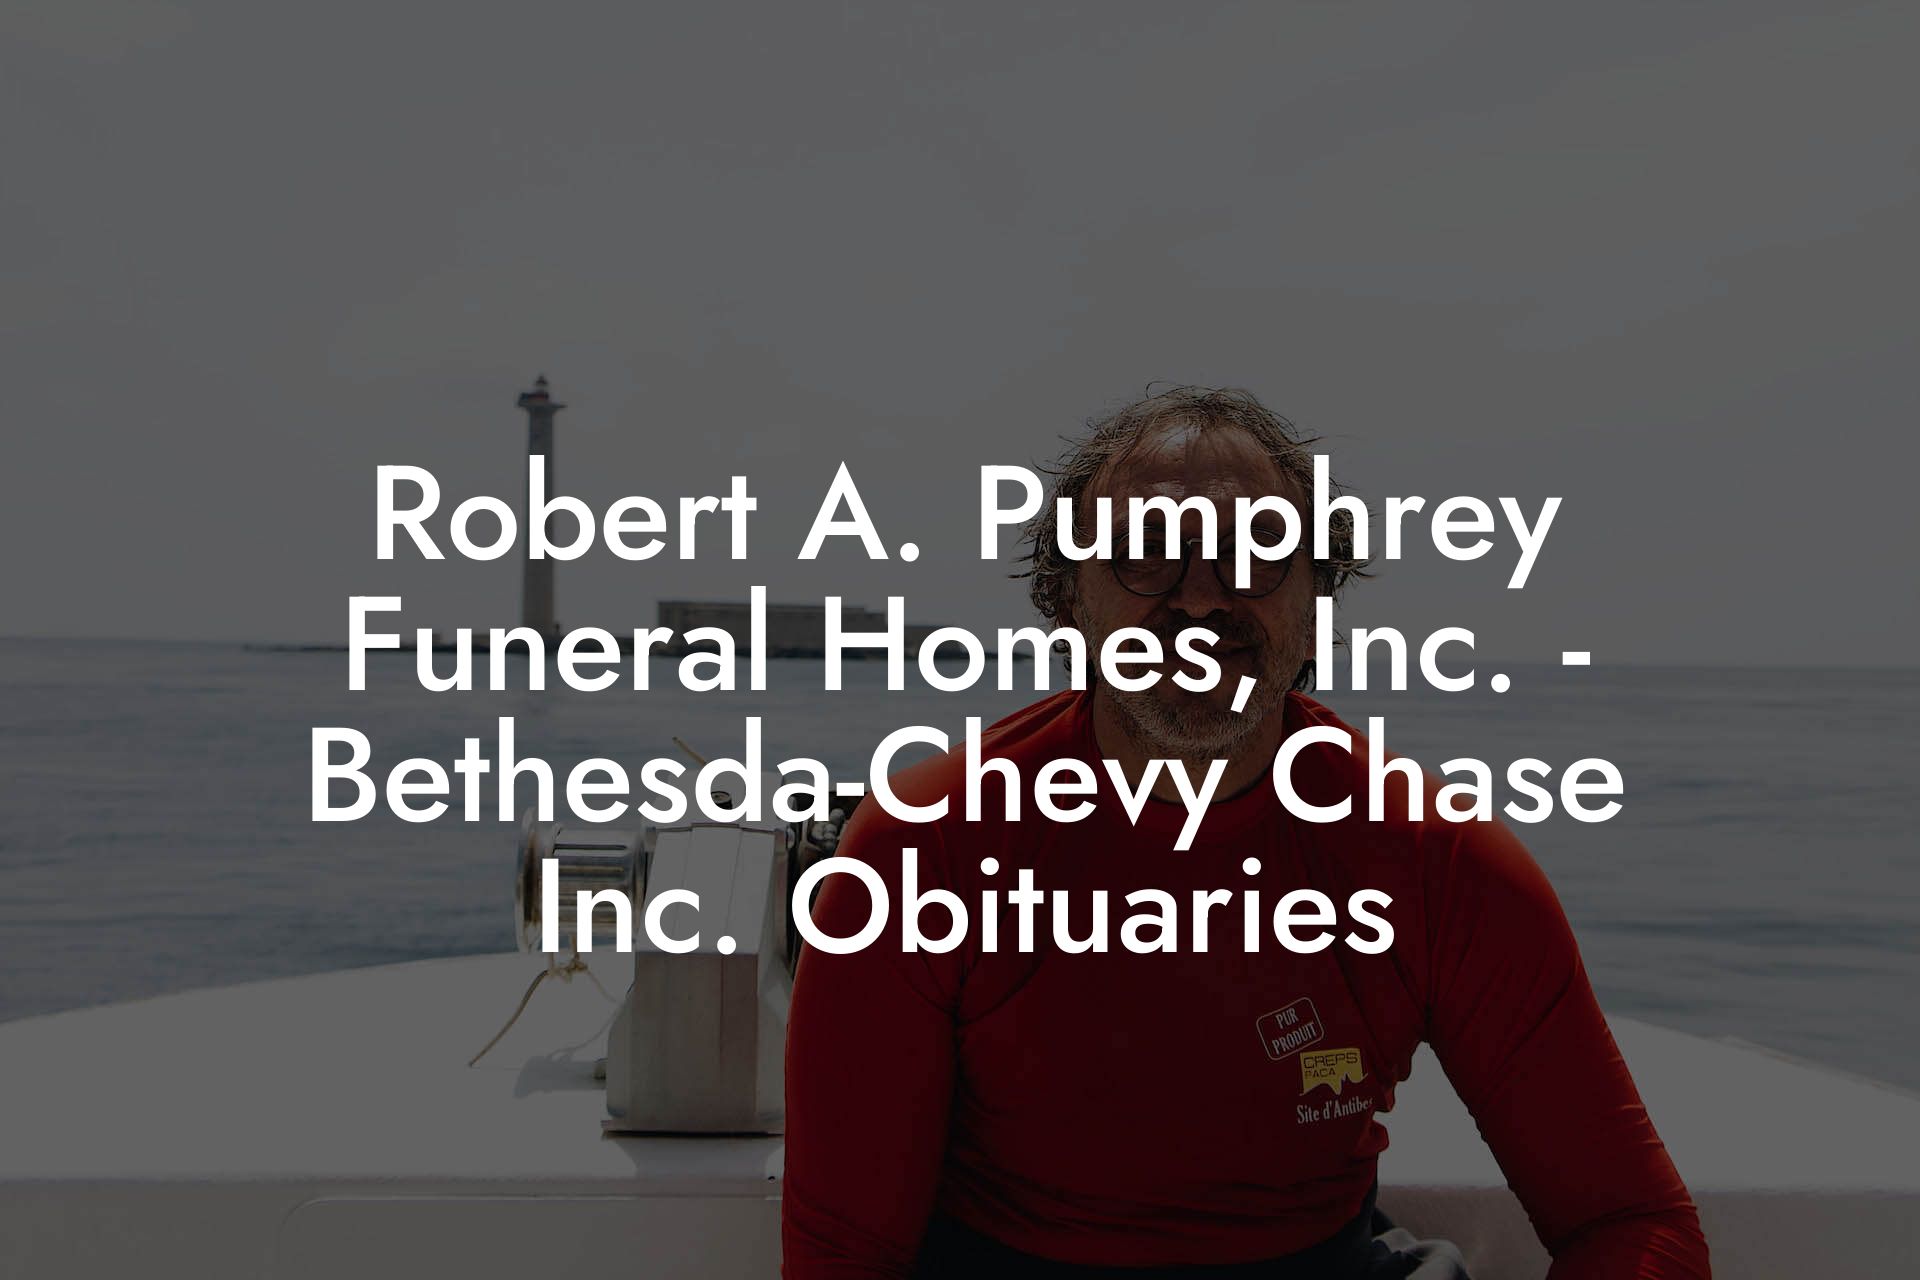 Robert A. Pumphrey Funeral Homes, Inc. - Bethesda-Chevy Chase Inc. Obituaries